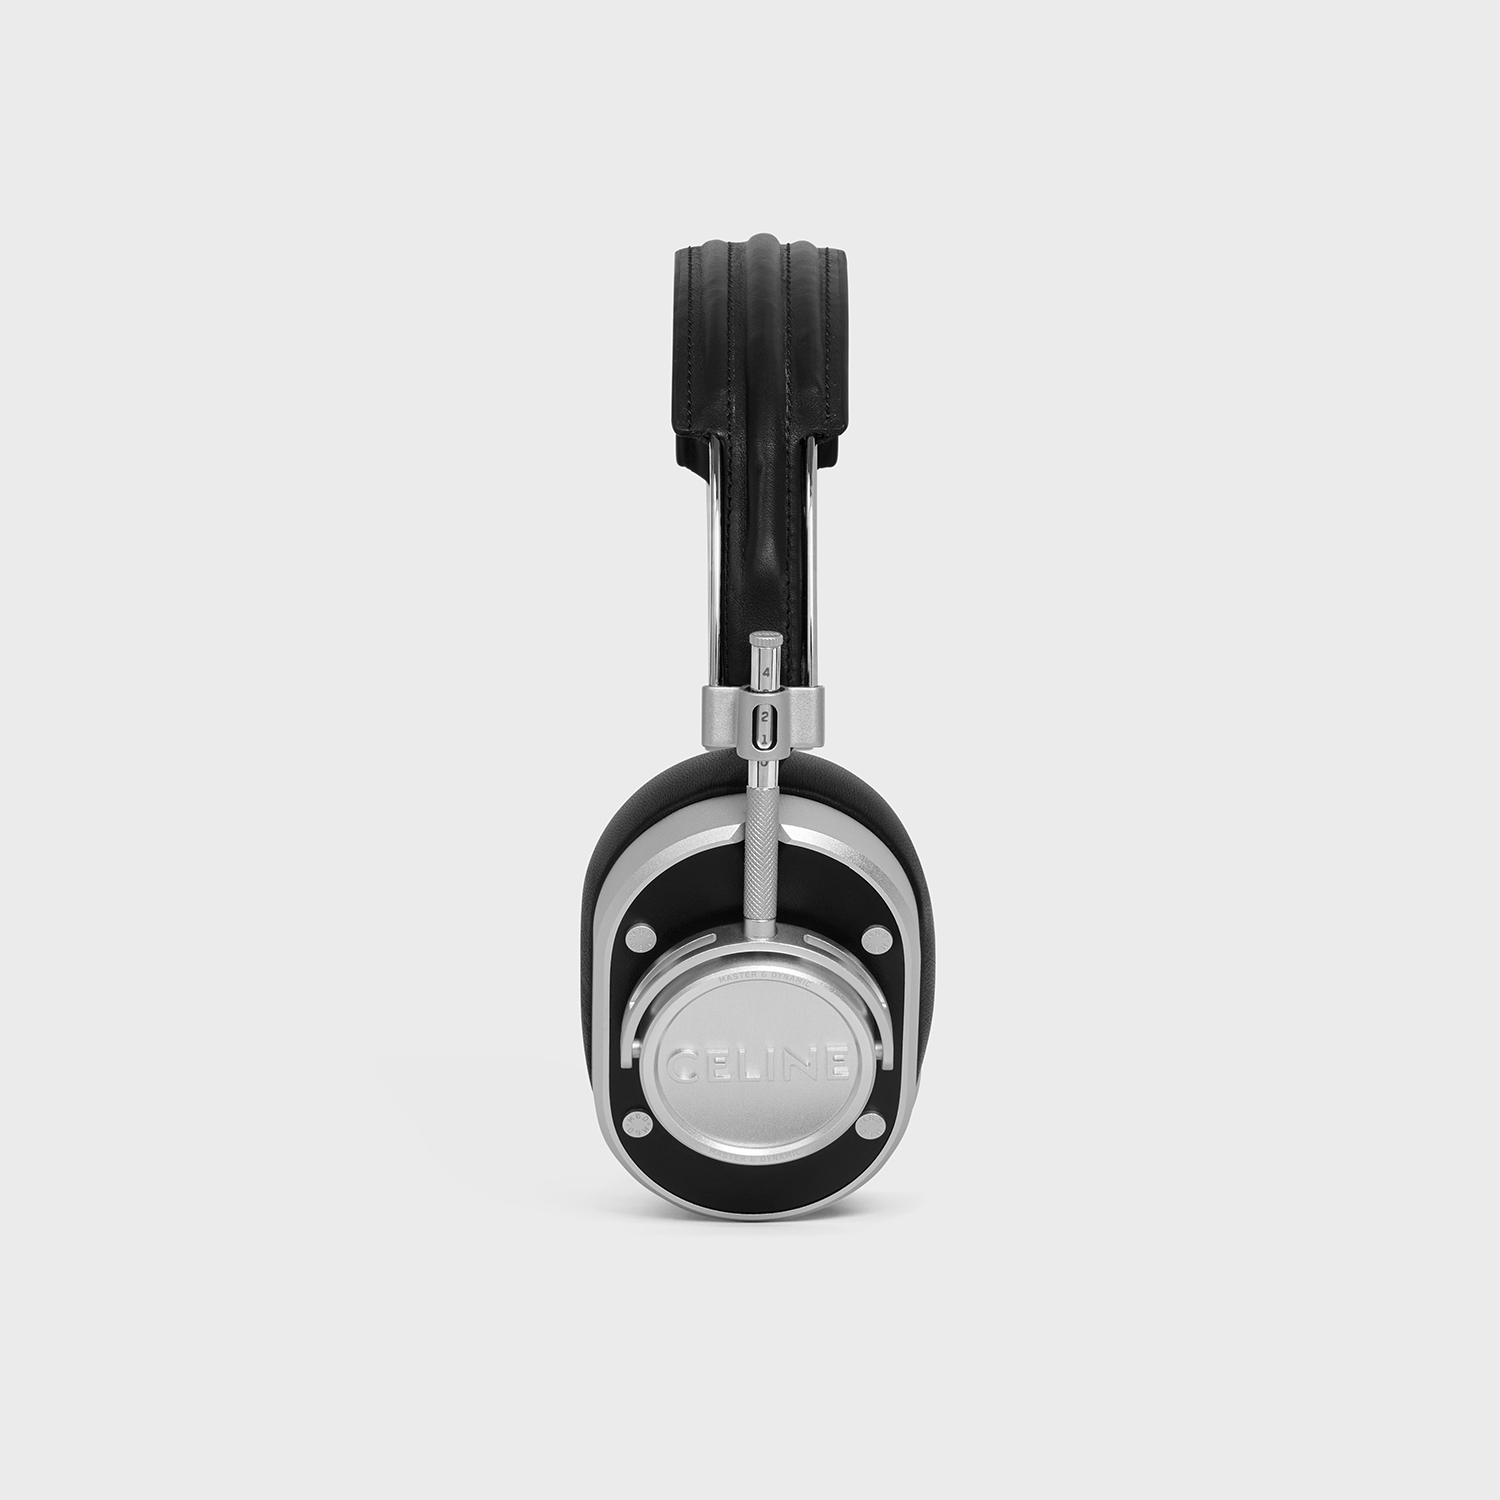 celine-master-dynamic-headphones-release-date-11